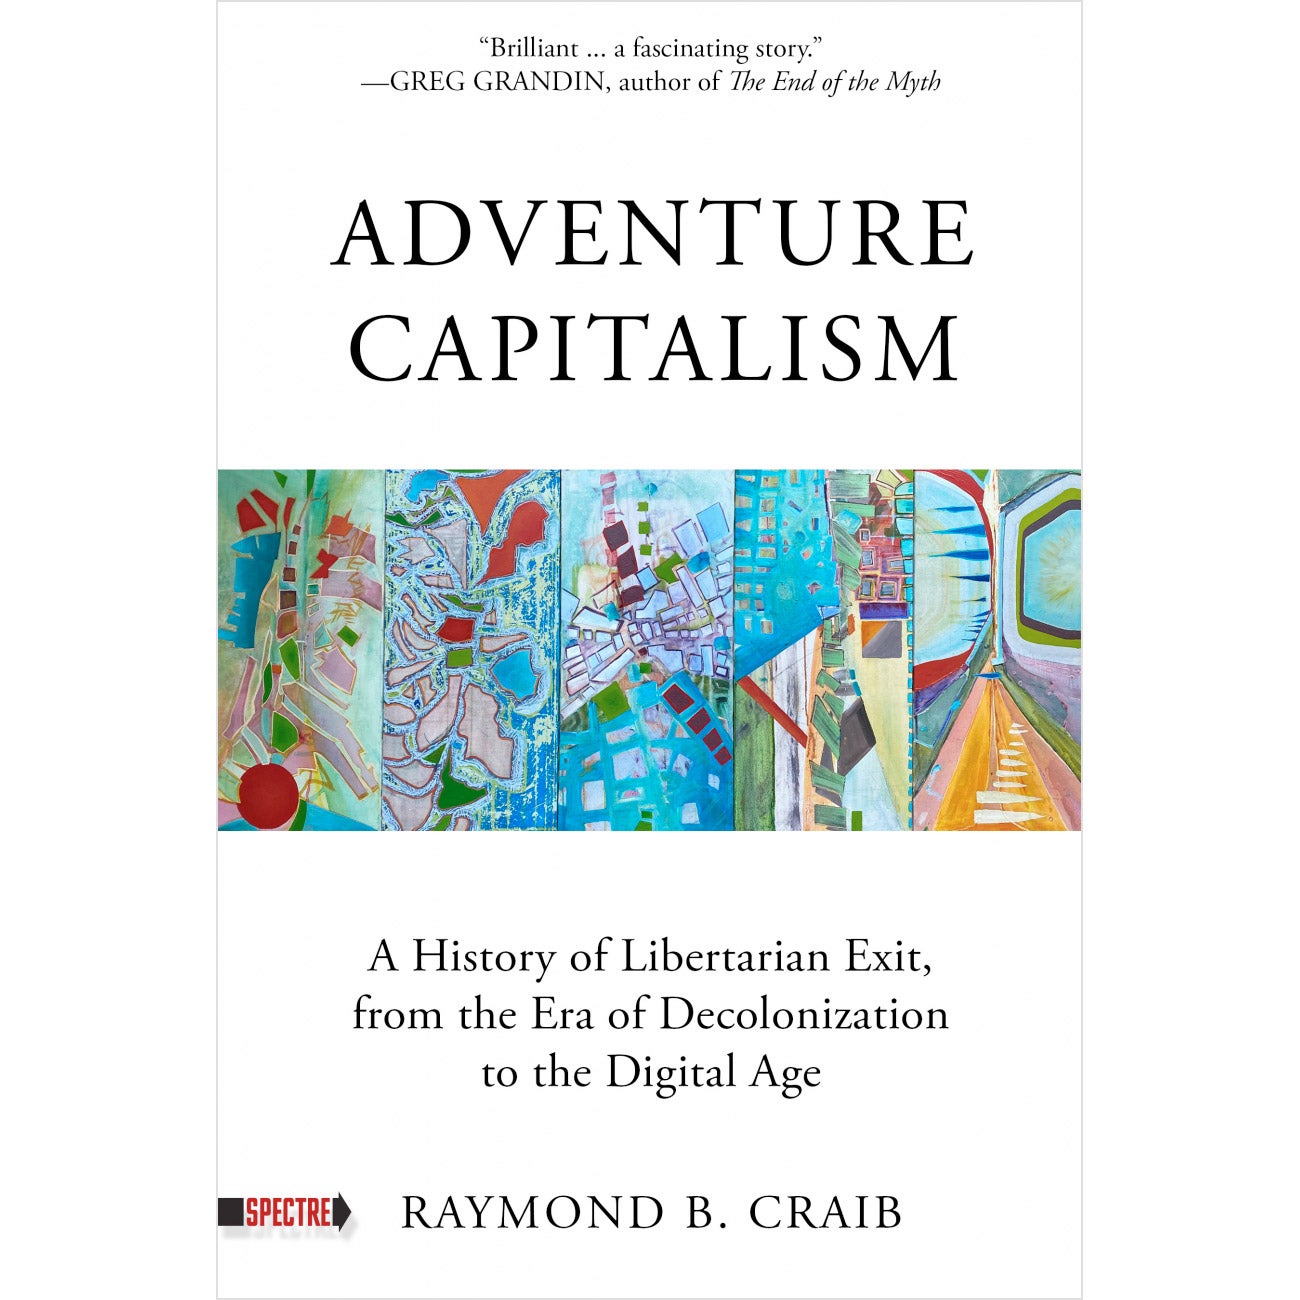 Adventure Capitalism book cover